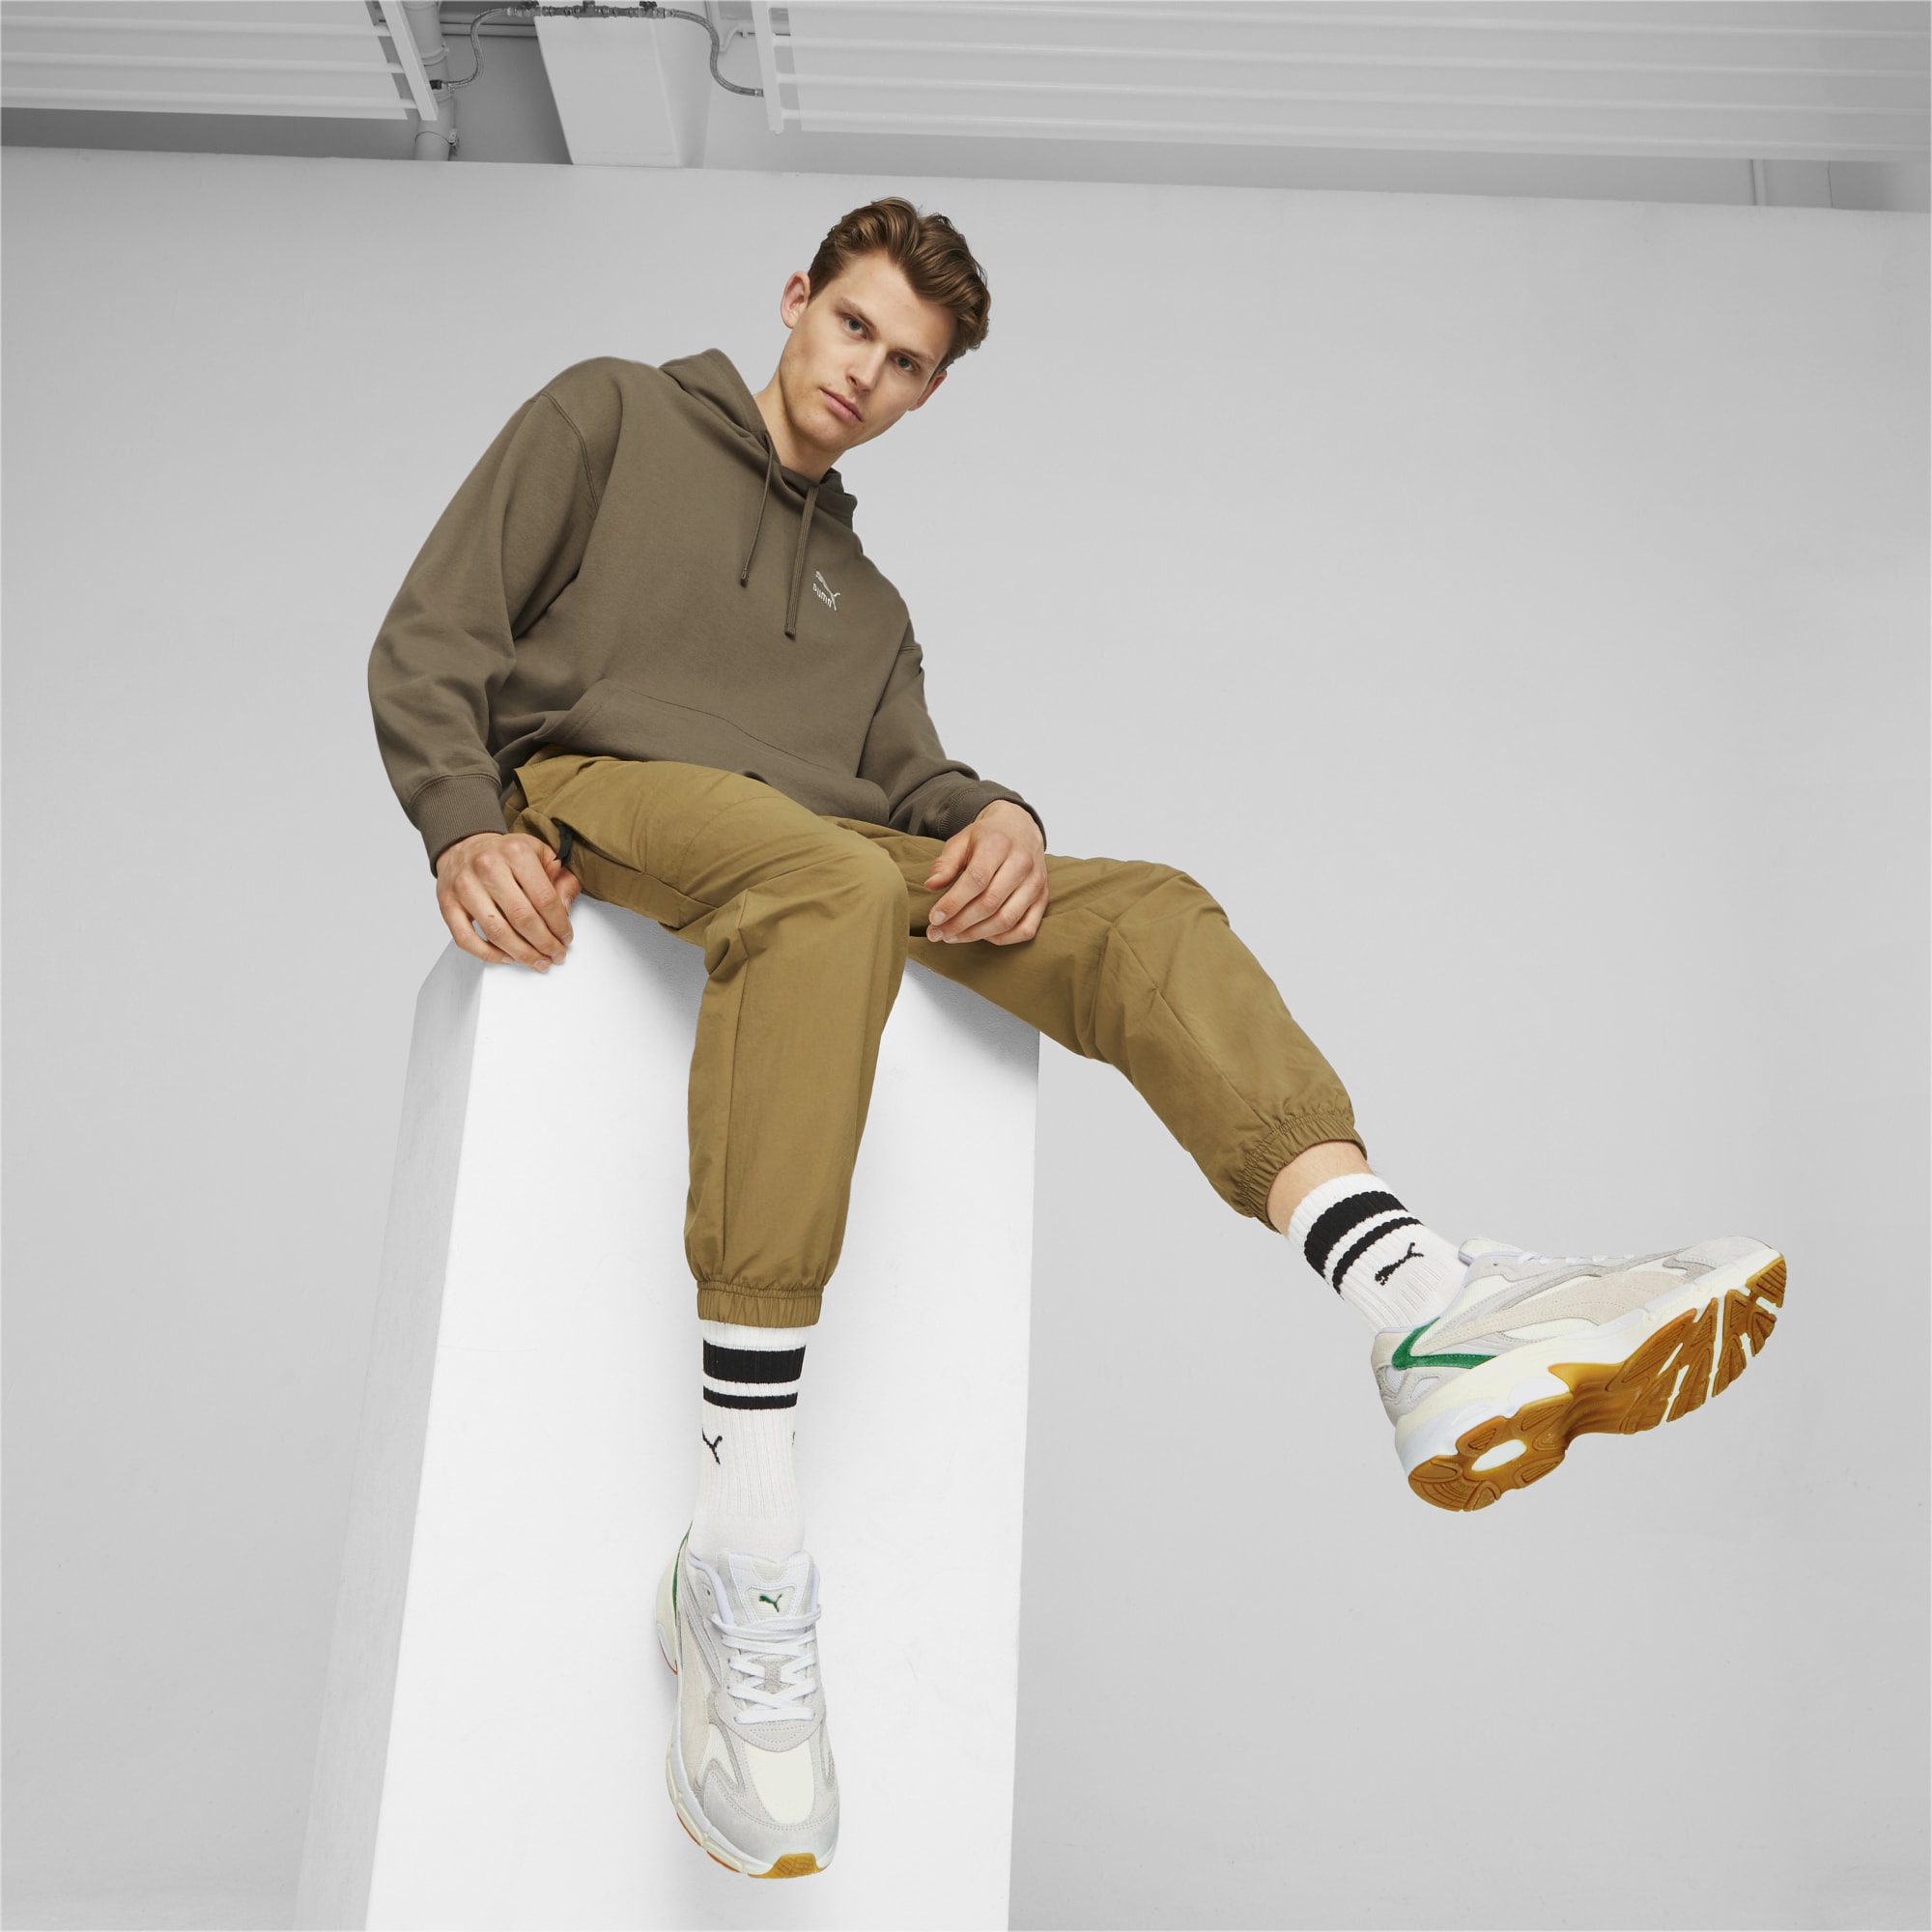 Men's PUMA Teveris Nitro Corduroy Sneakers, Warm White/Archive Green, Size 35,5, Shoes